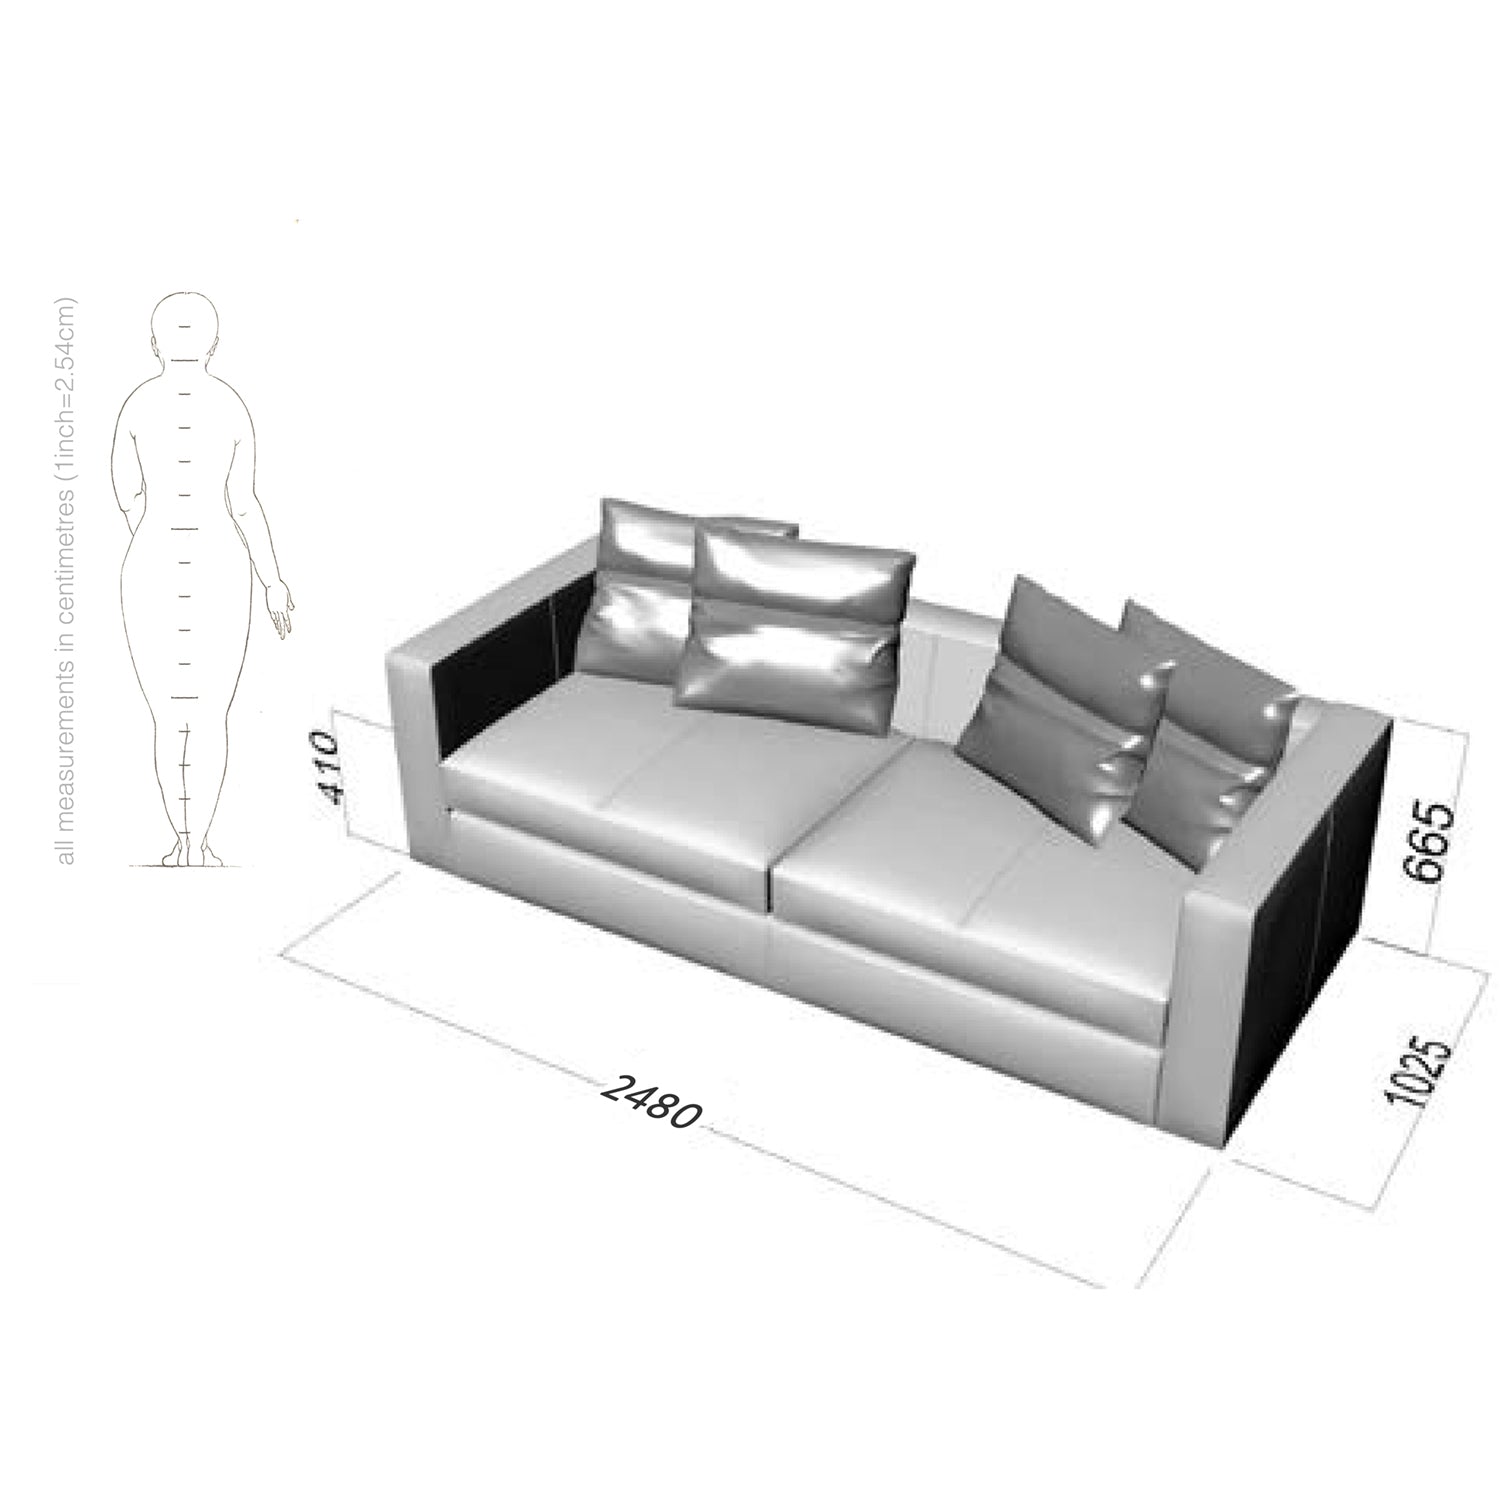 sofa design drawing dimensions. in 3D